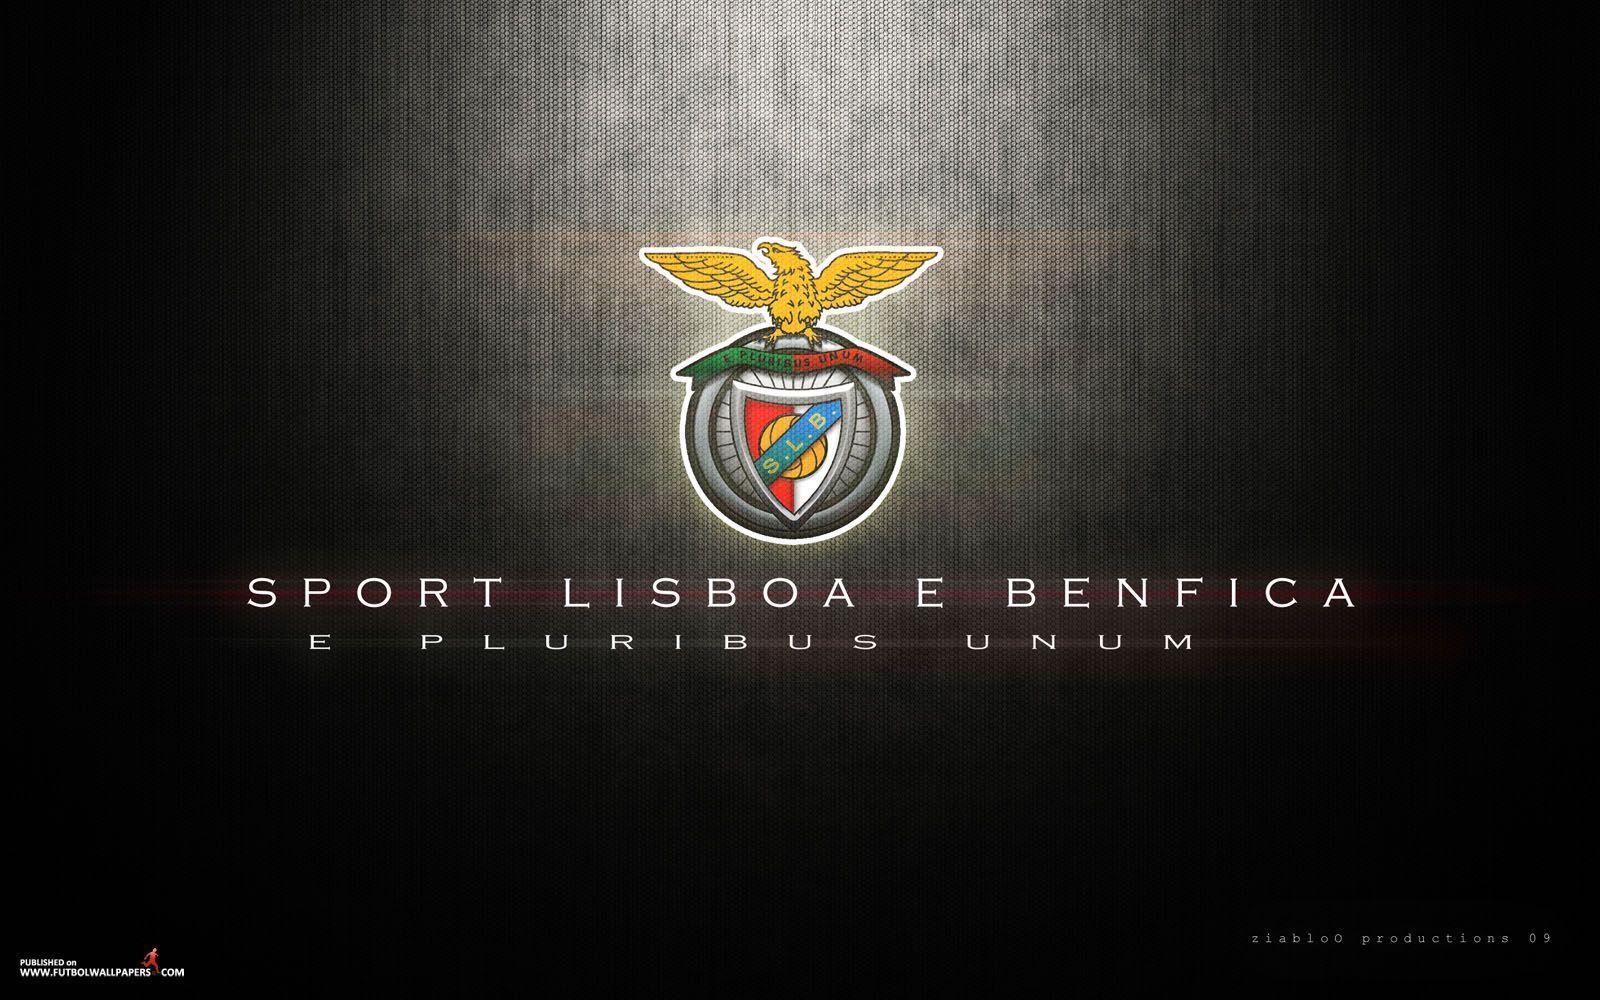 باشگاه فوتبال بنفیکا (S.L. Benfica)